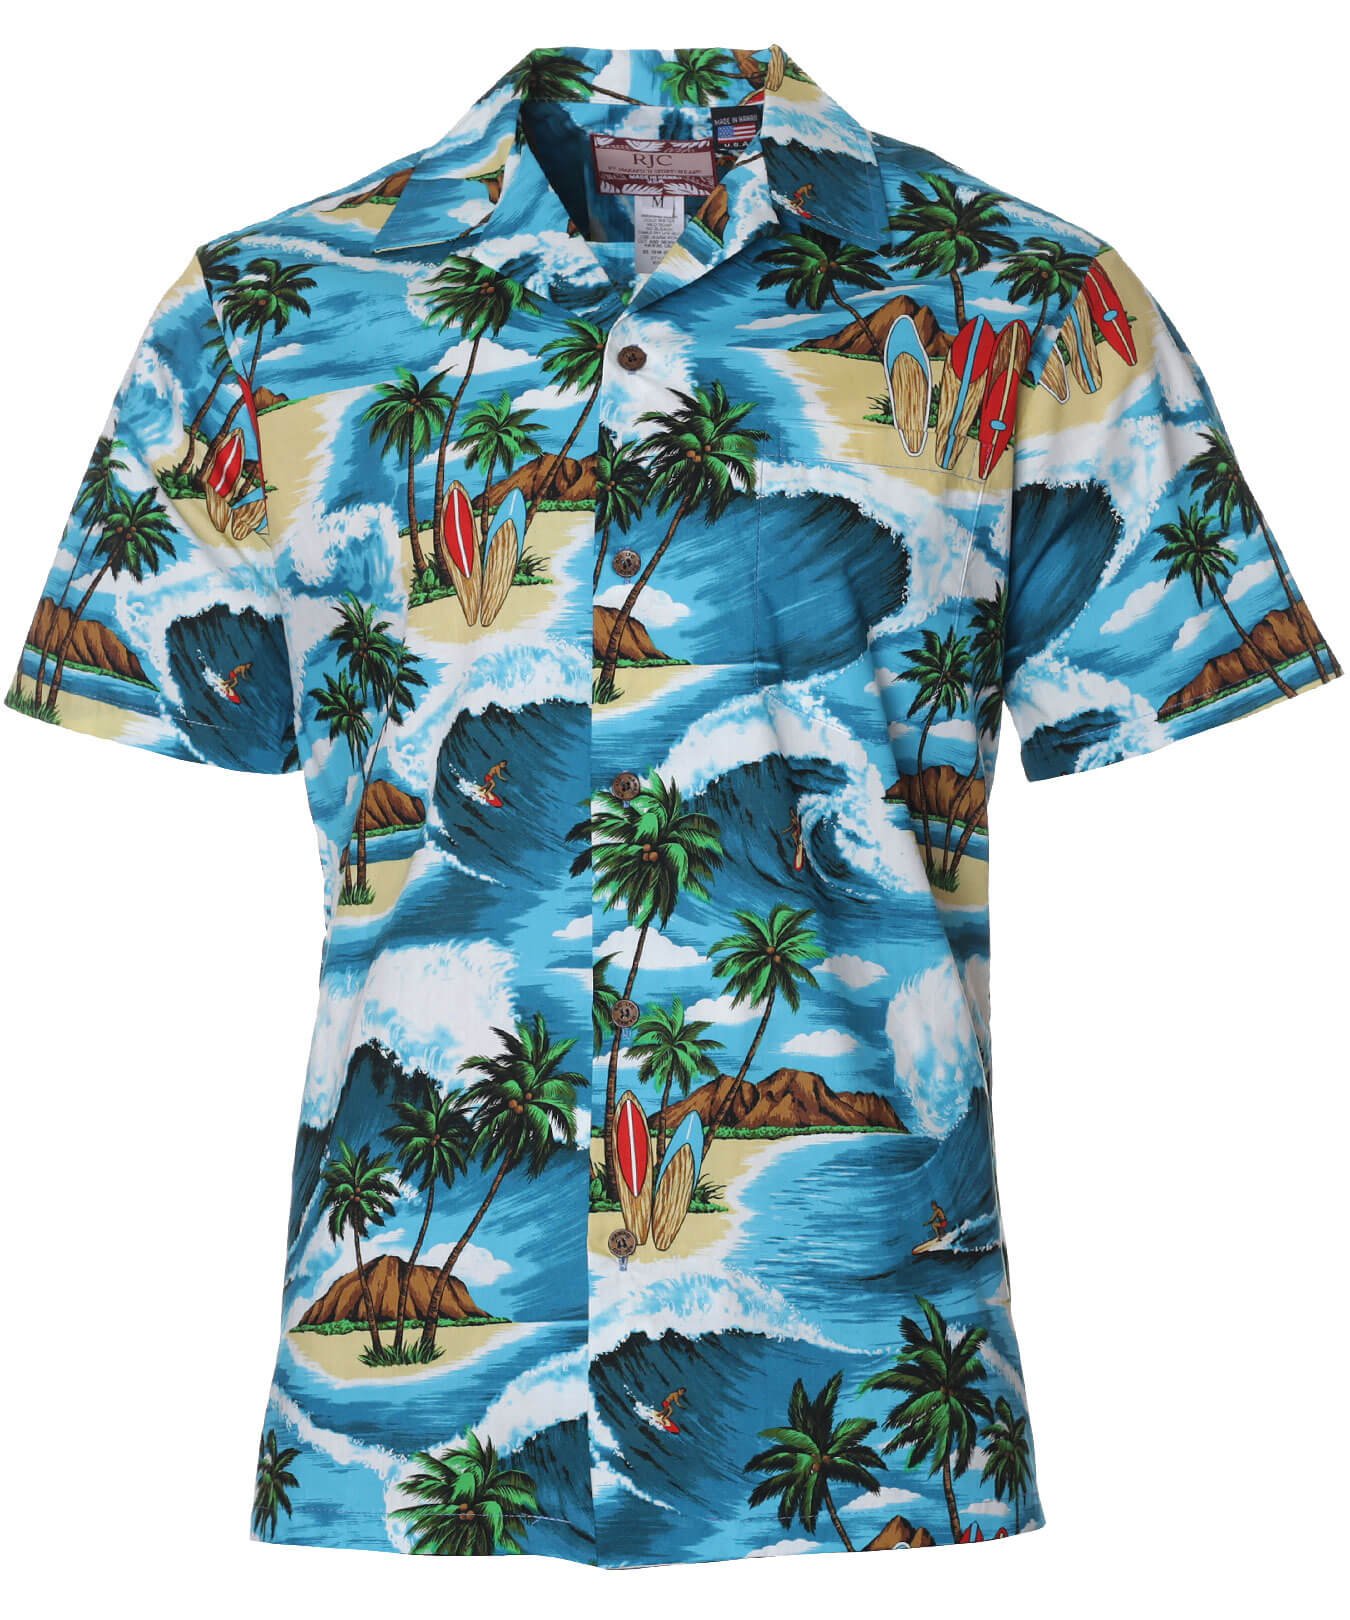 Cotton Surf Pipeline Men's Aloha Shirt Teal